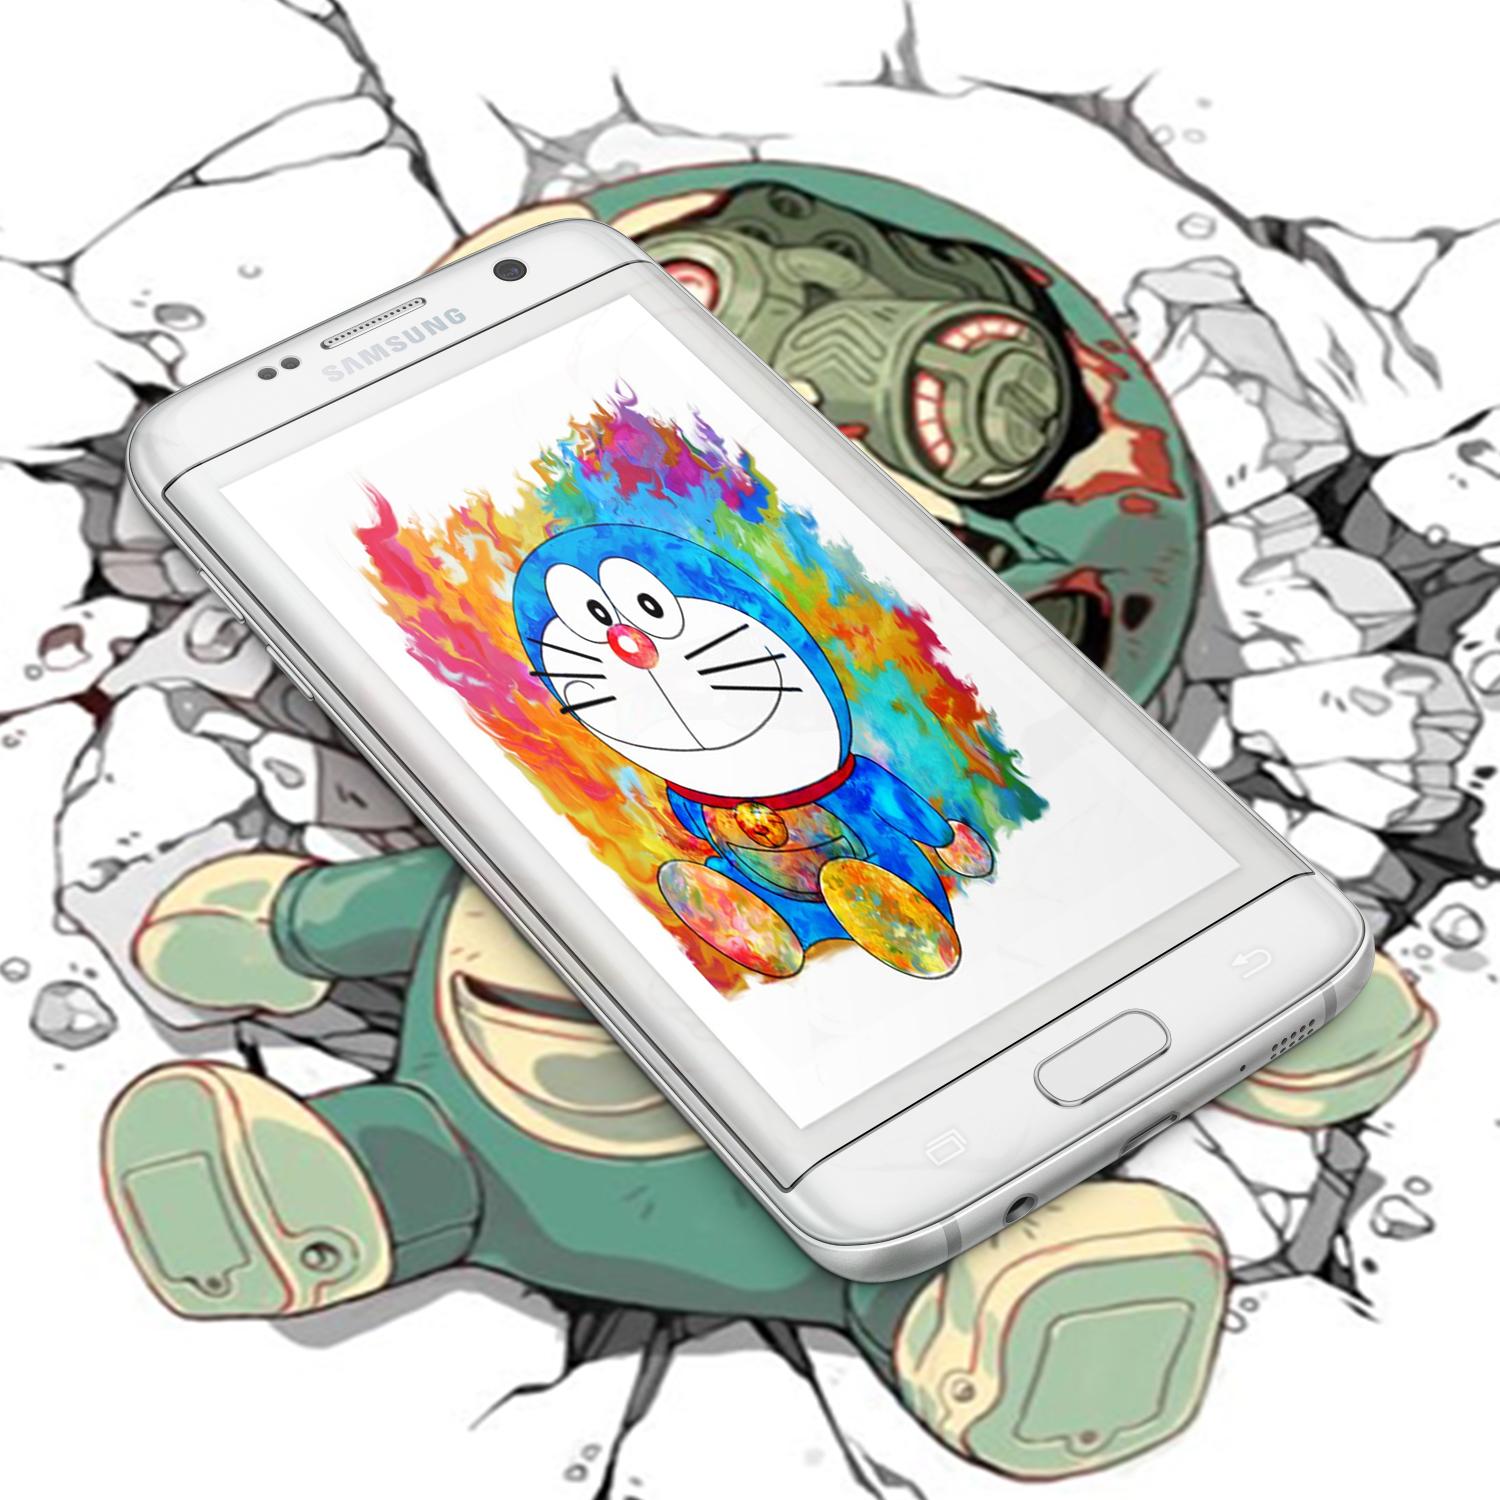 Doraemon live wallpaper 4K for Android - APK Download